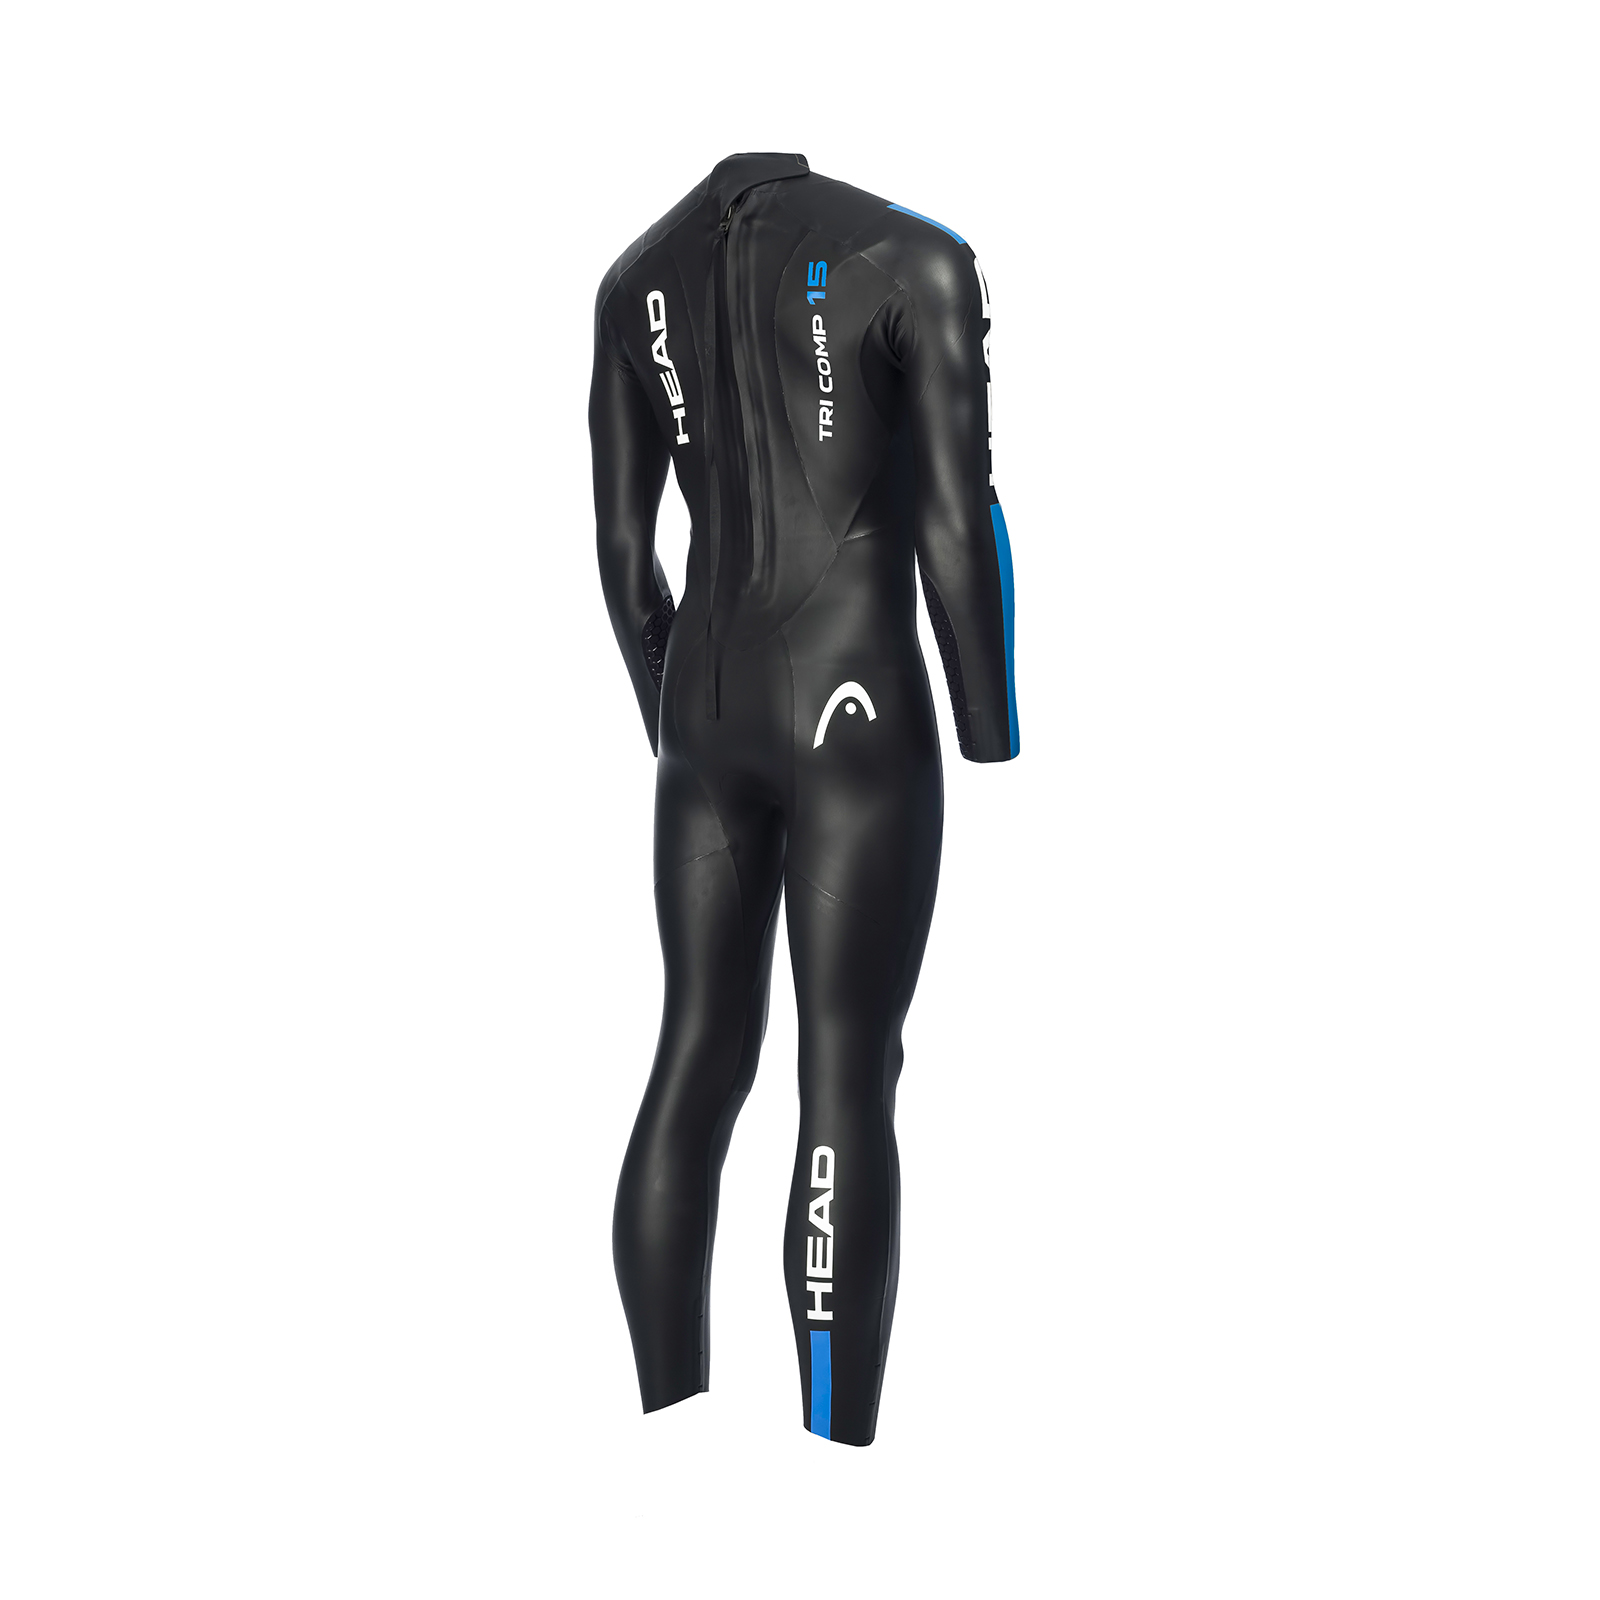 Head Tricomp Power Triathlon Wetsuit Men Black/Turquoise • Safety in ...